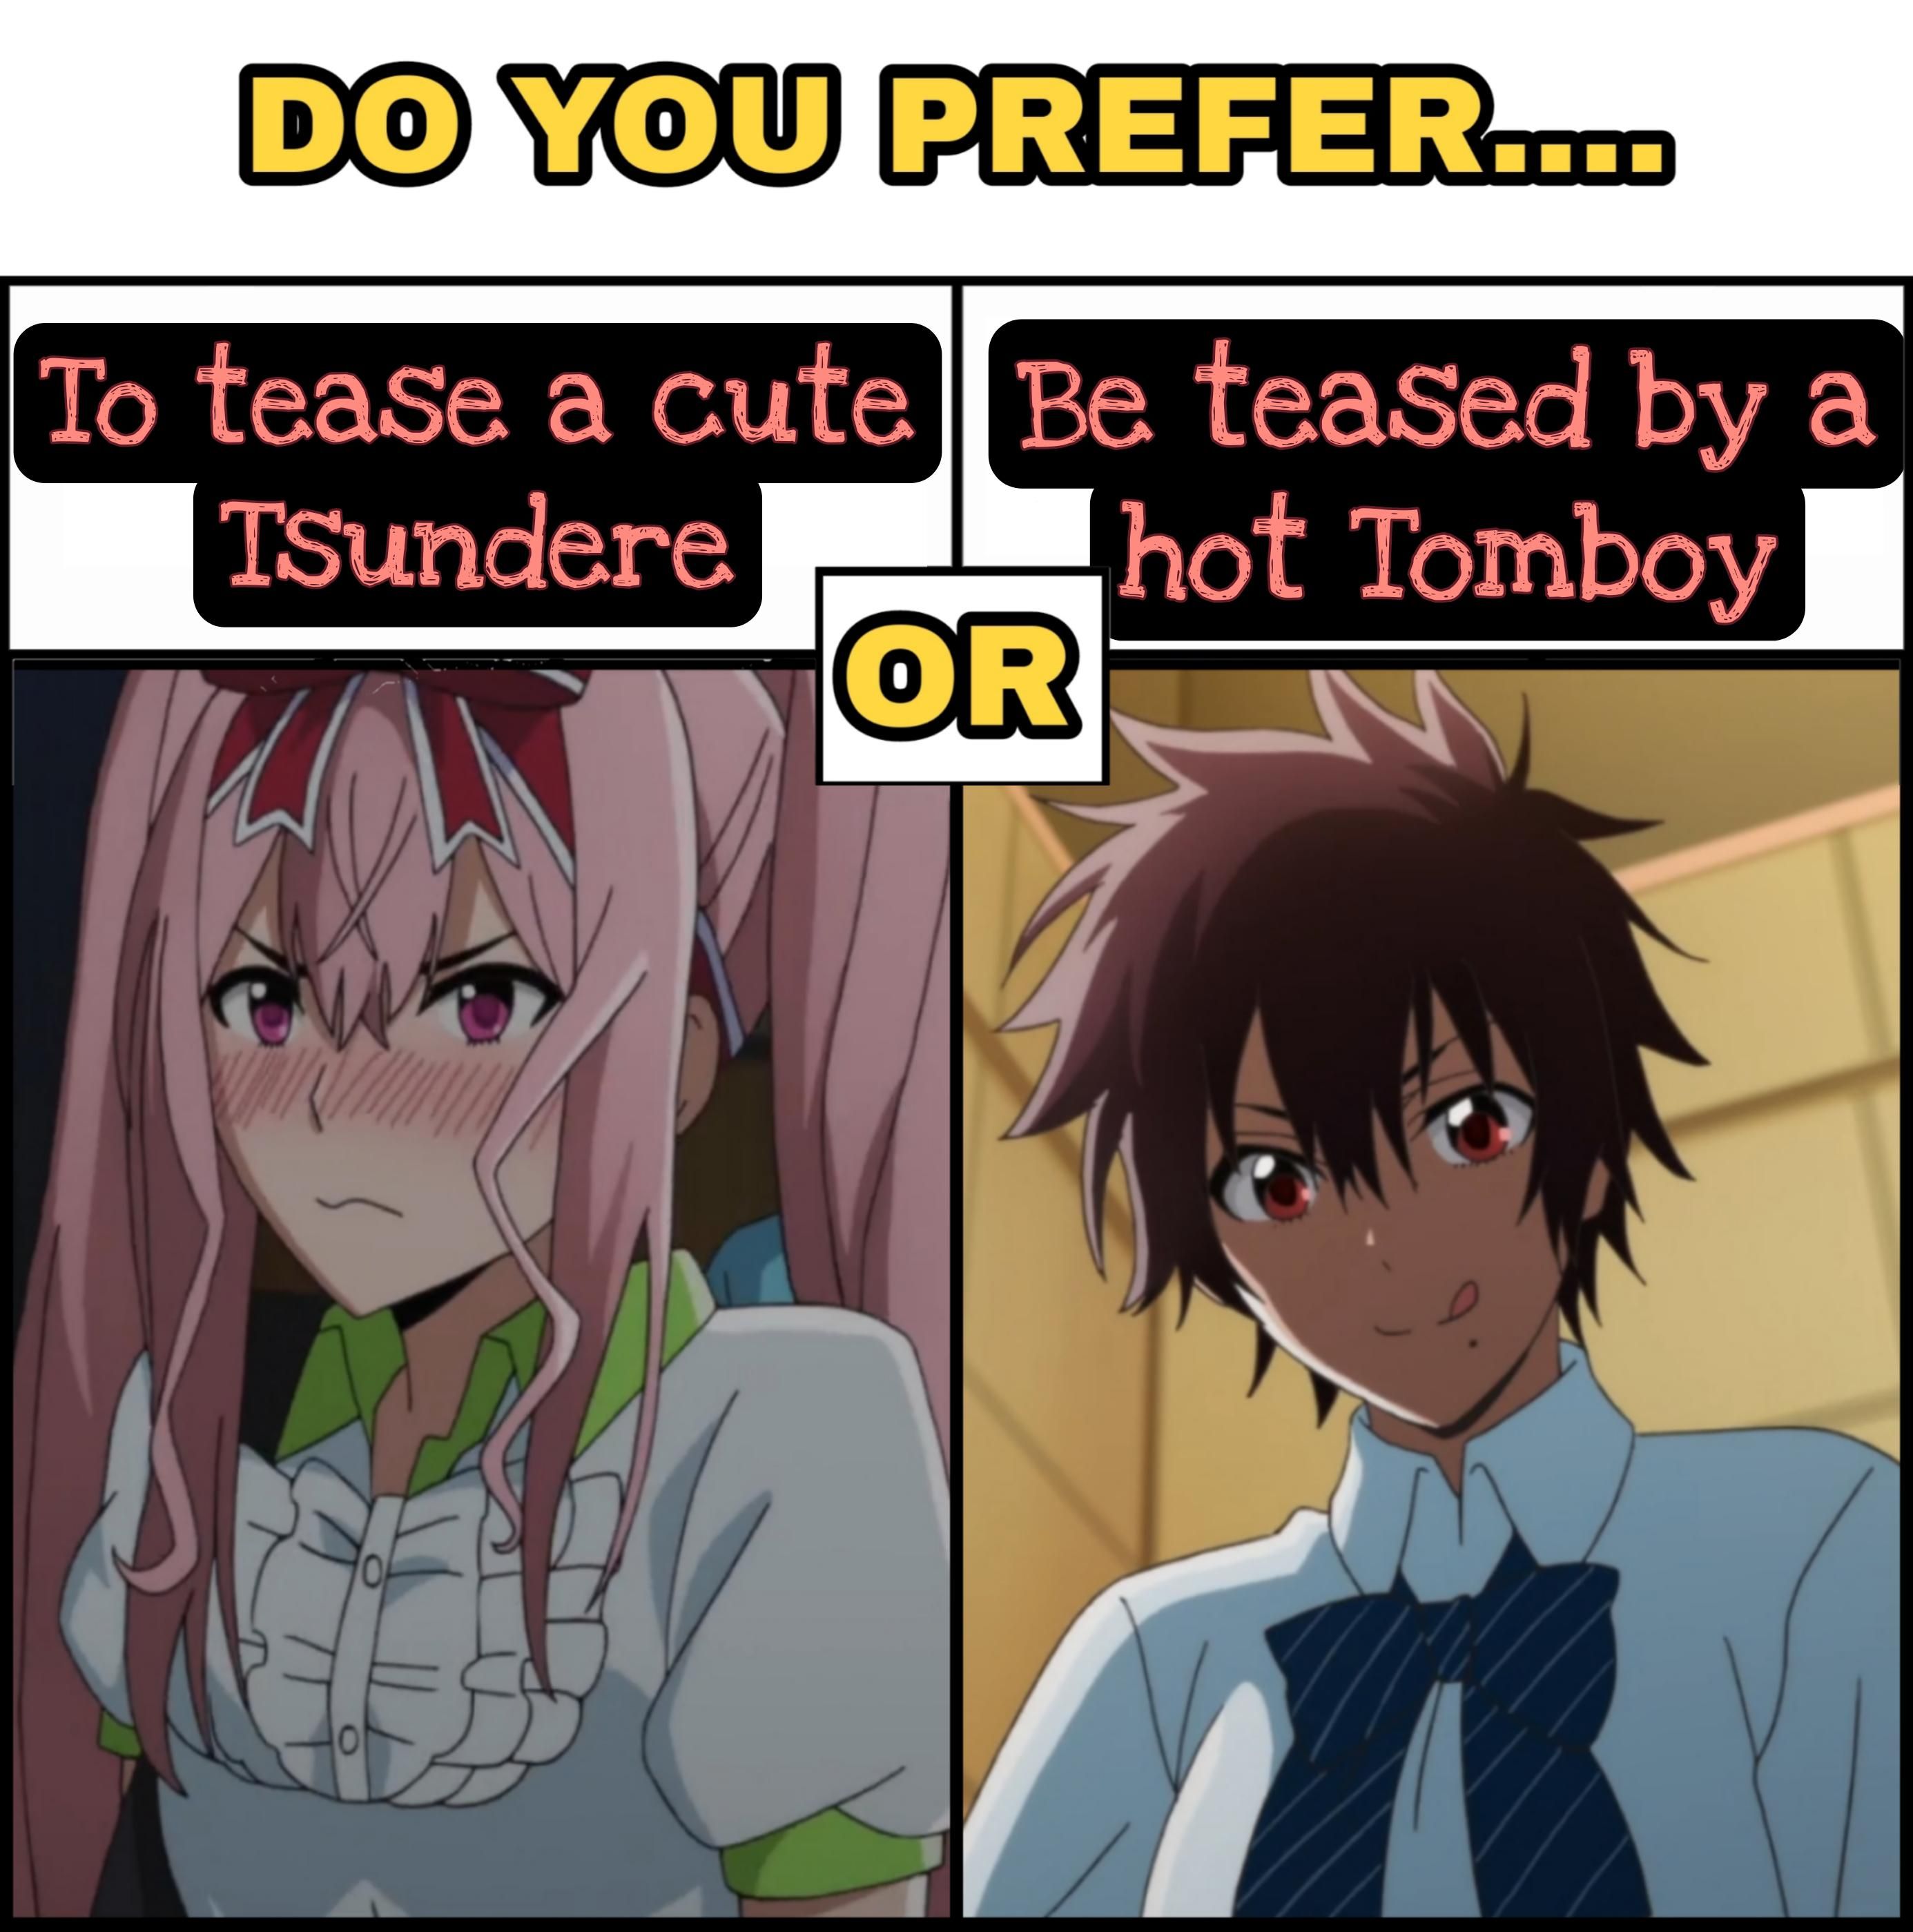 Tsundere or Tomboy?